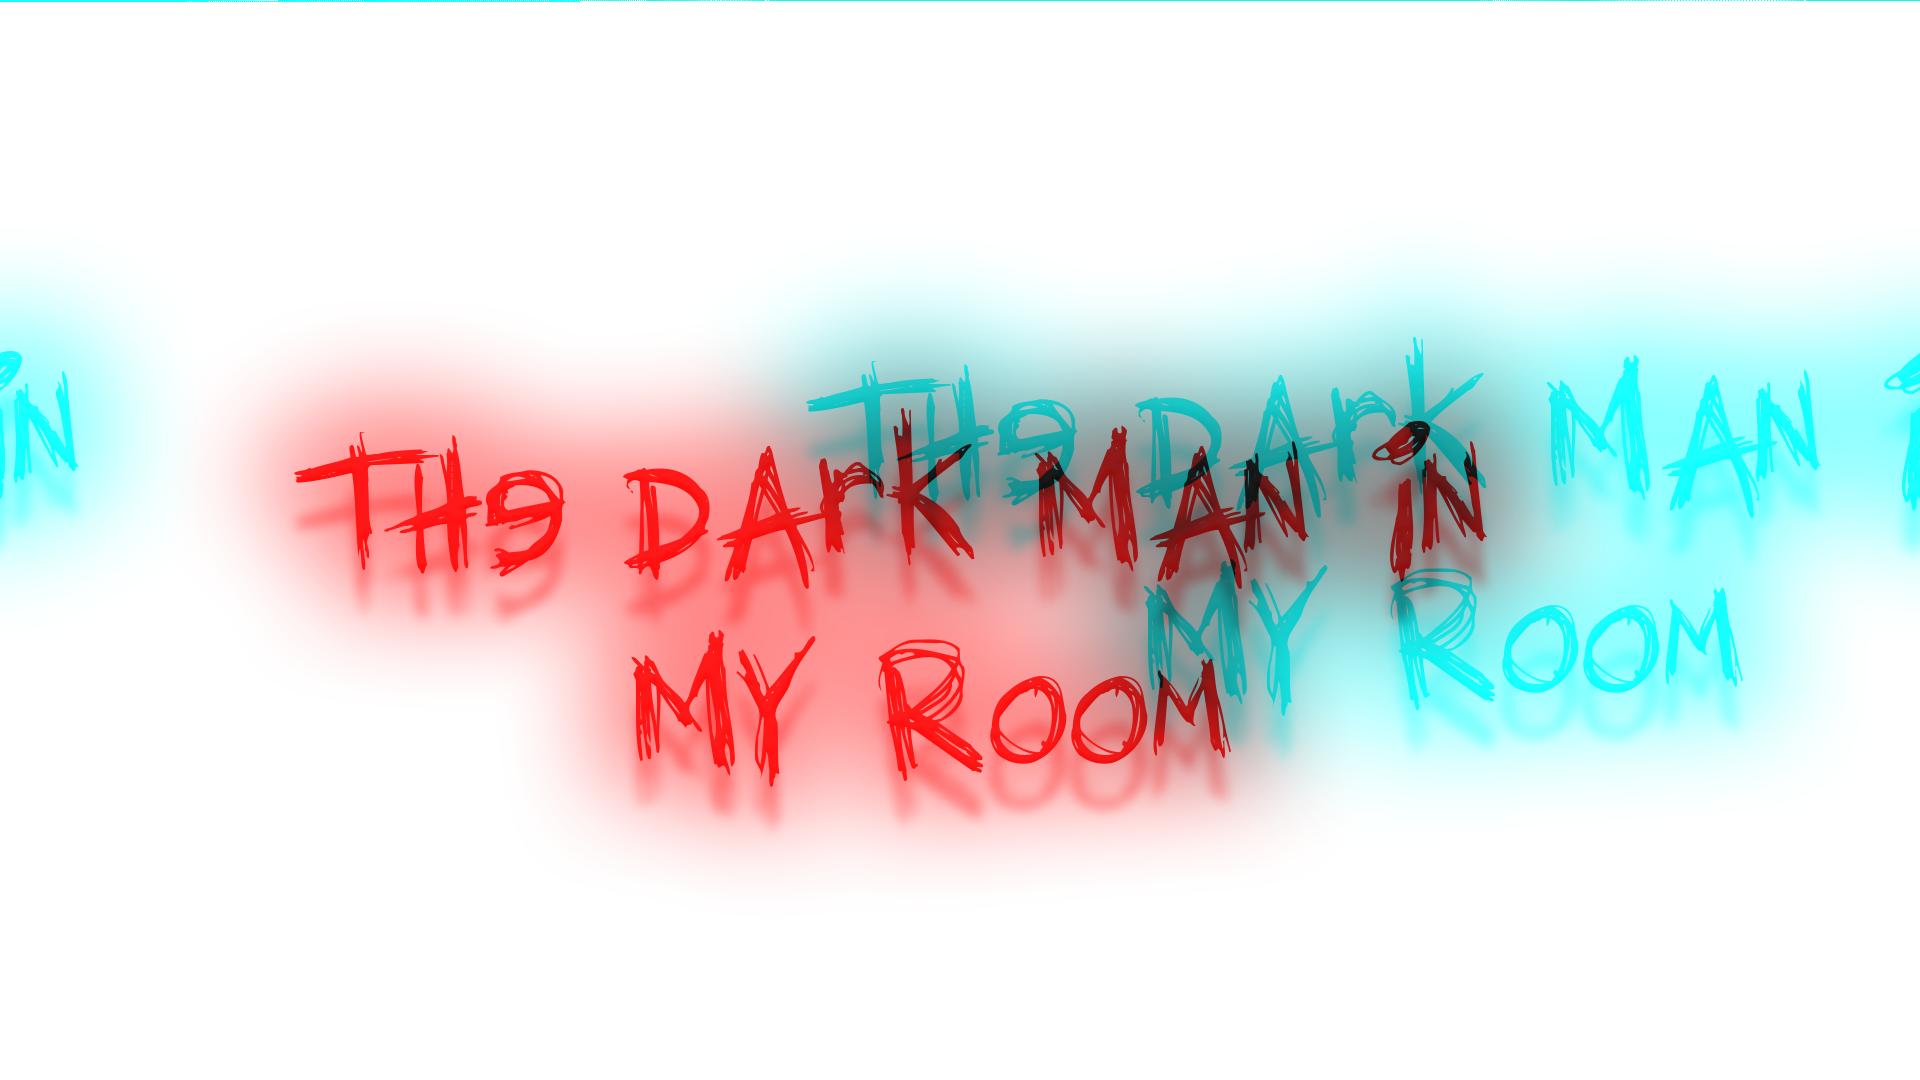 The Dark Man in My Room